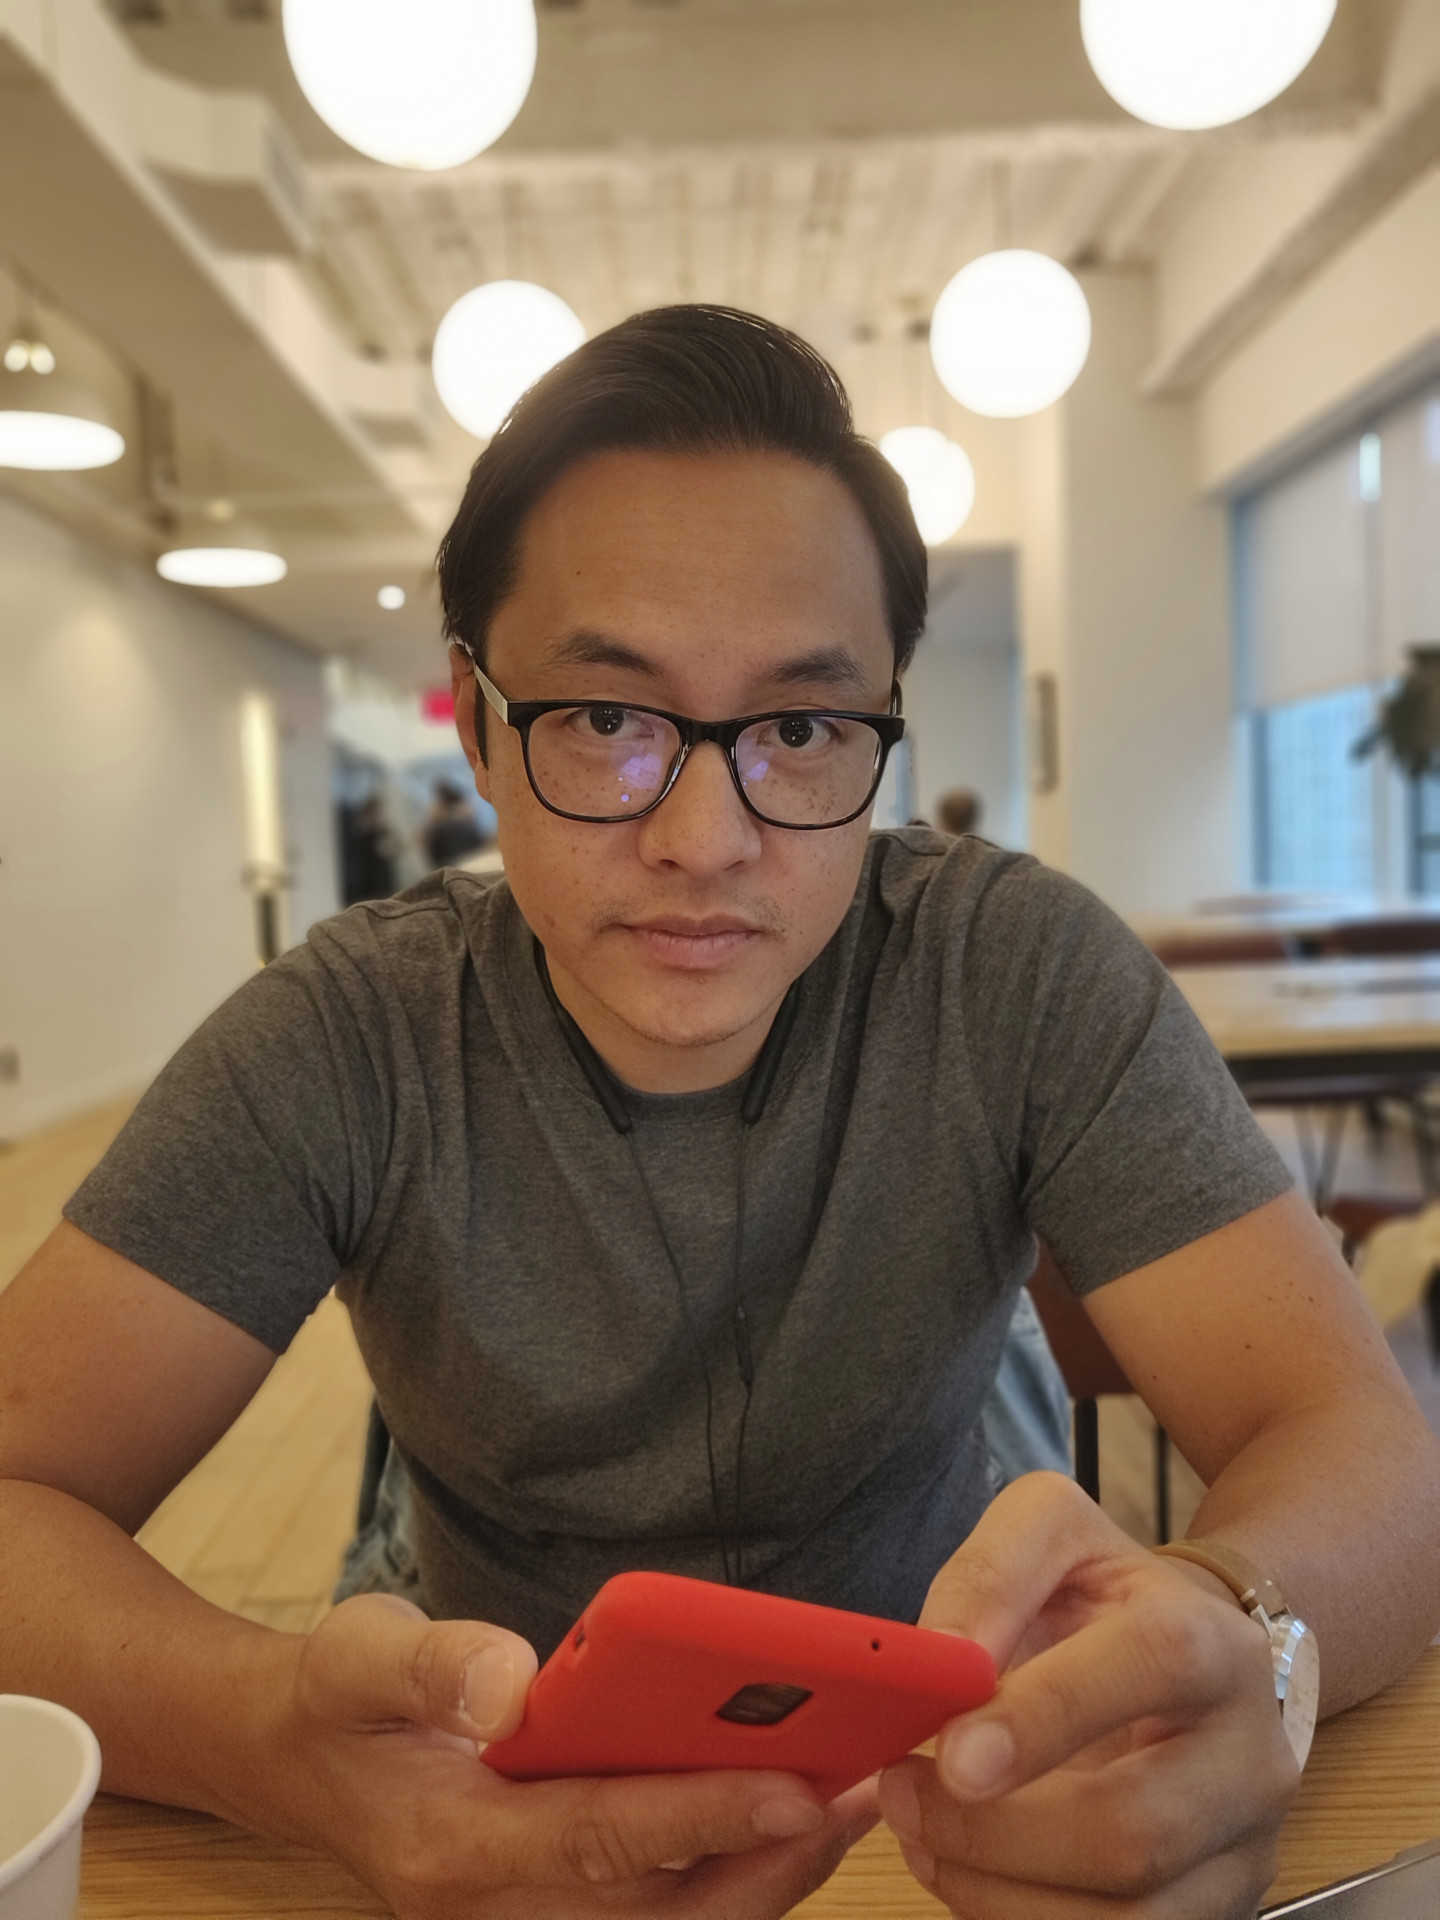 OnePlus 6T Portrait mode